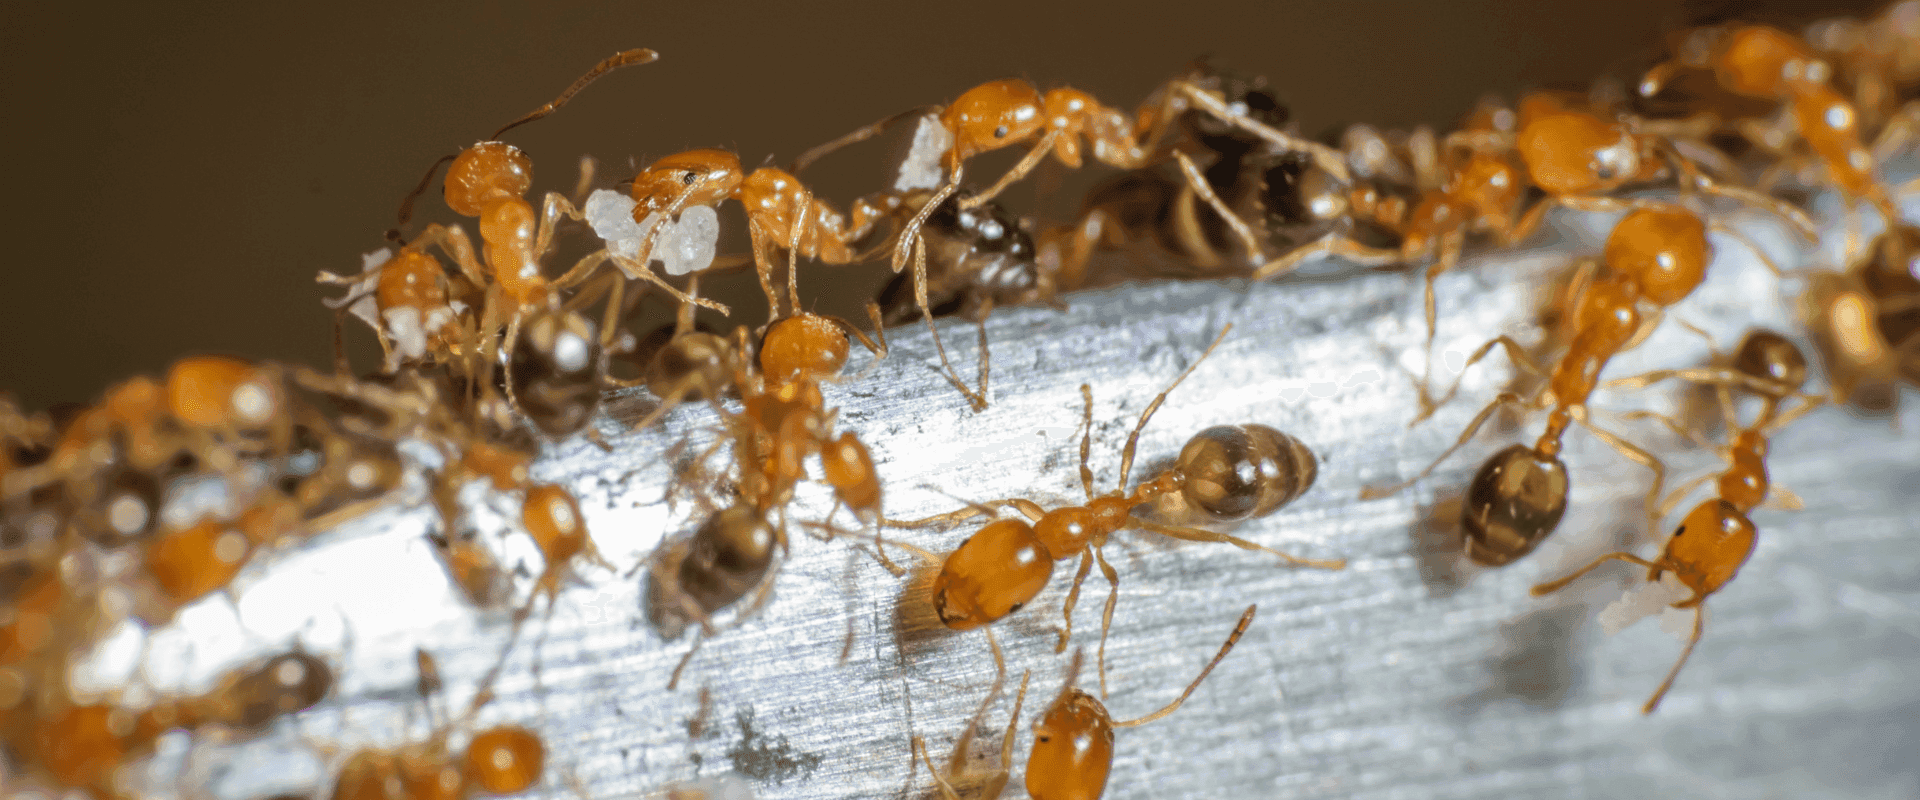 Pharaoh Ant Identification in Florida